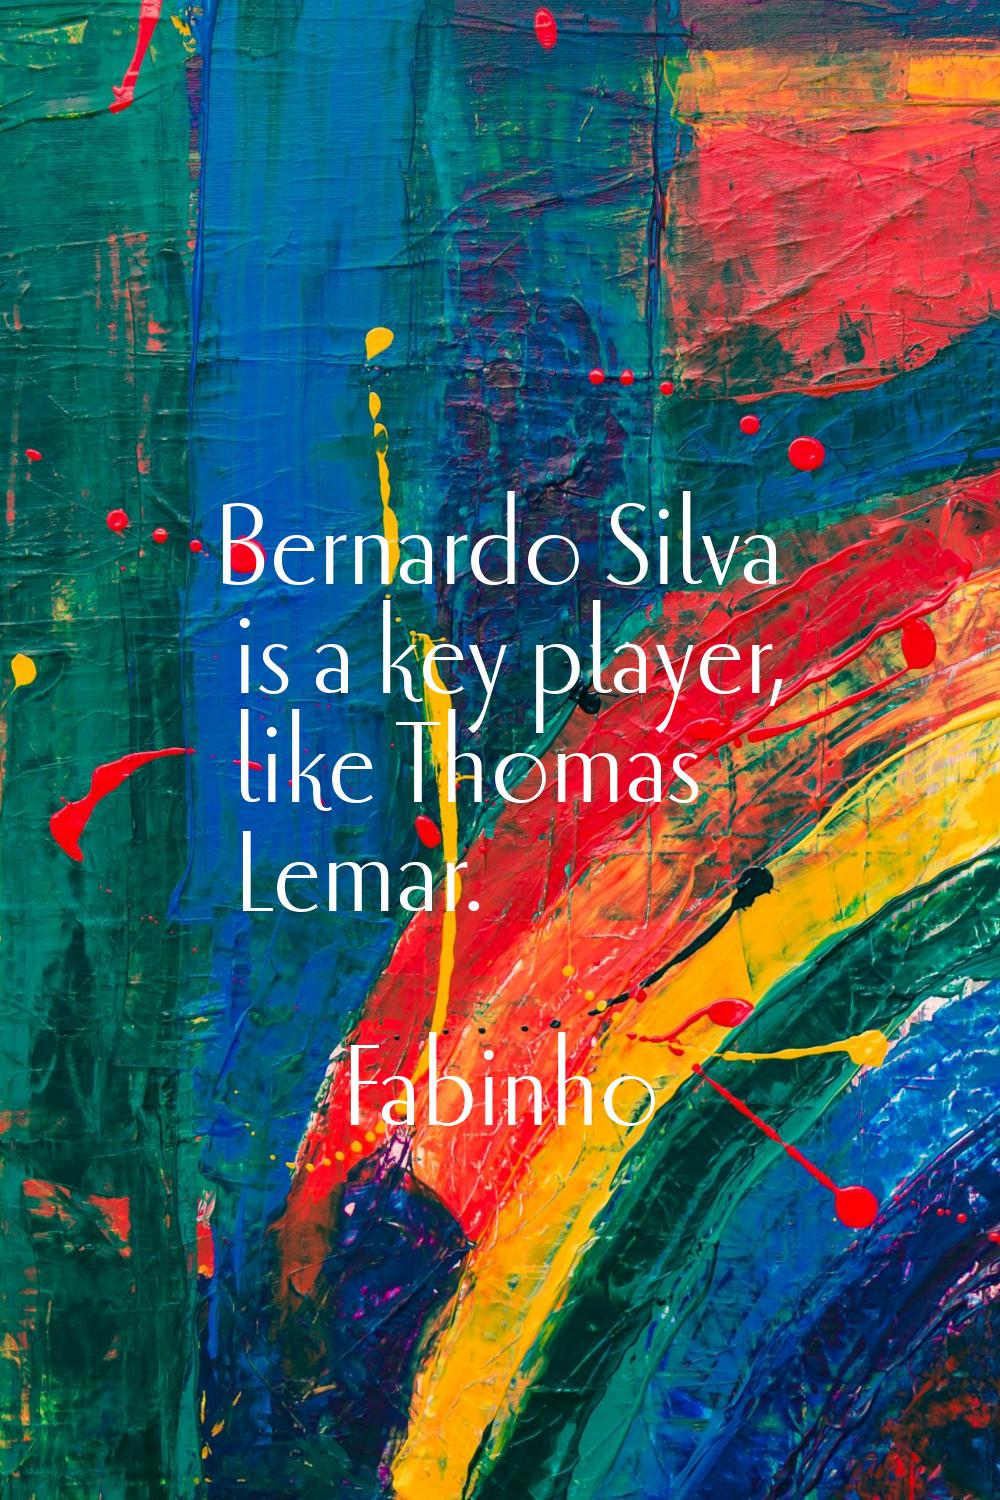 Bernardo Silva is a key player, like Thomas Lemar.